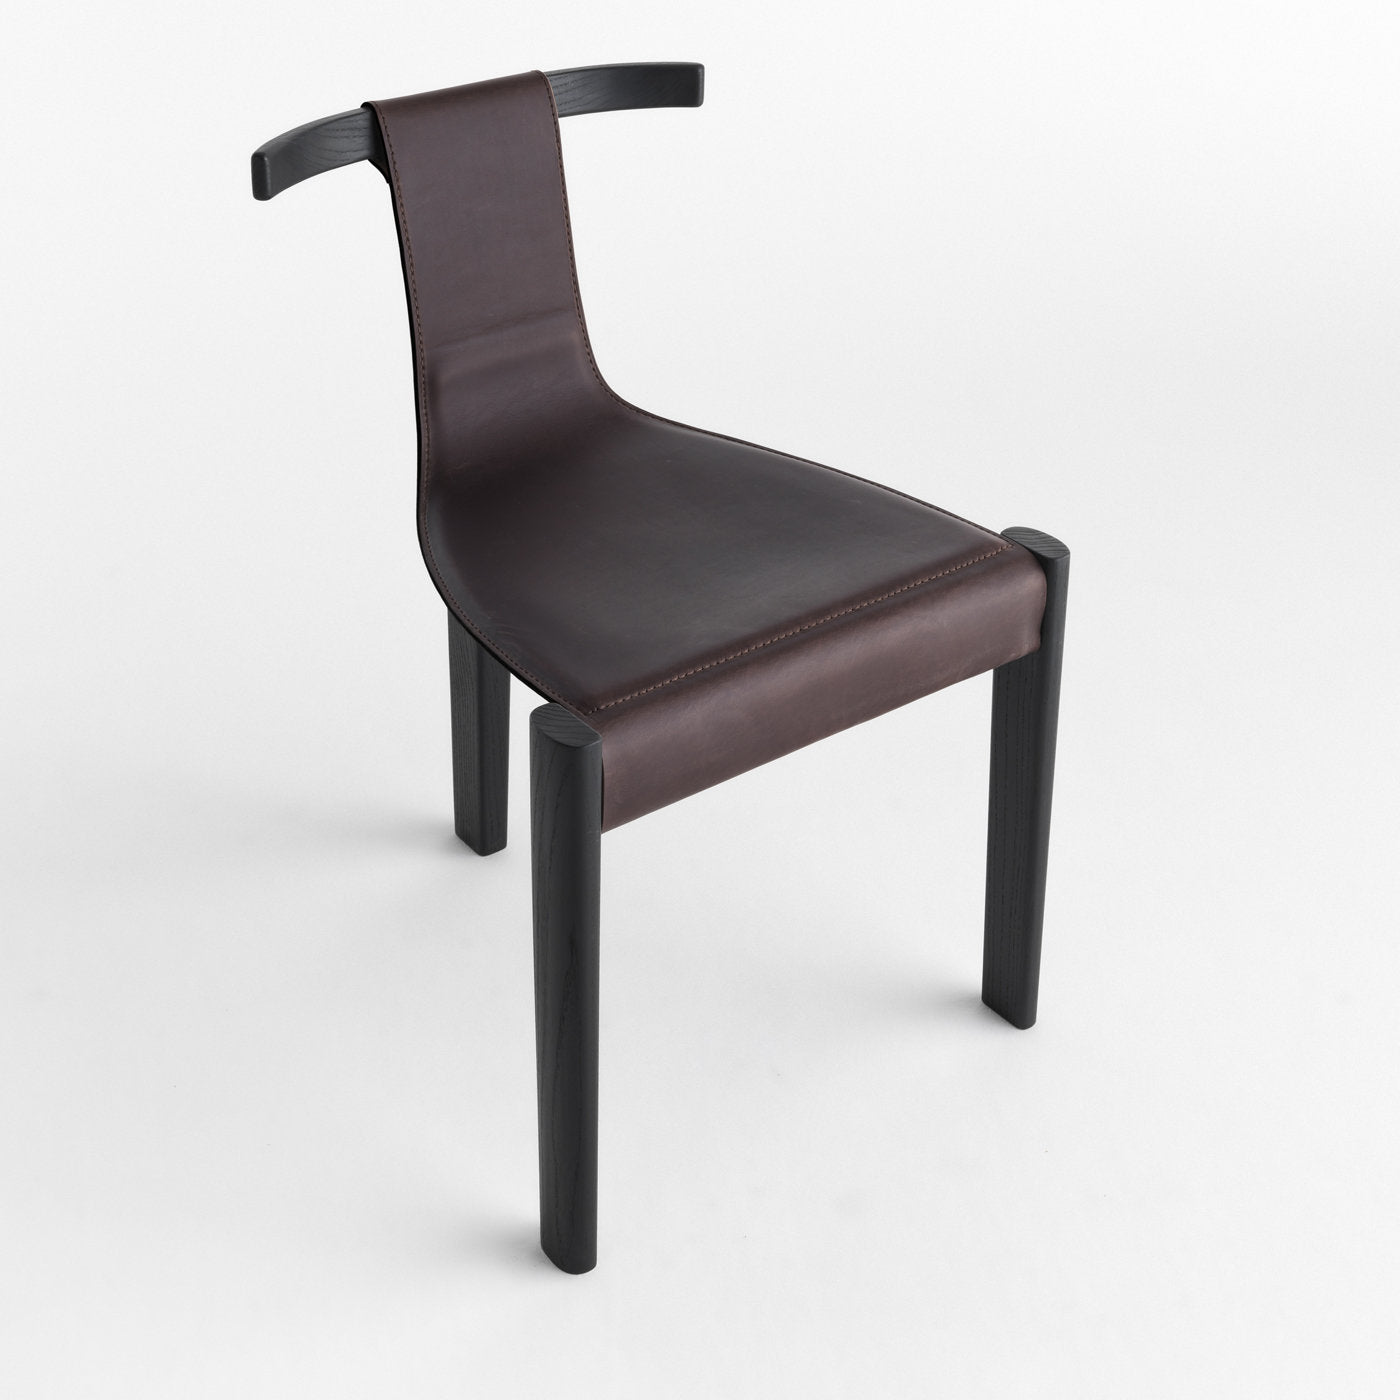 Pablita Brown Chair by Marcello Pozzi - Alternative view 1